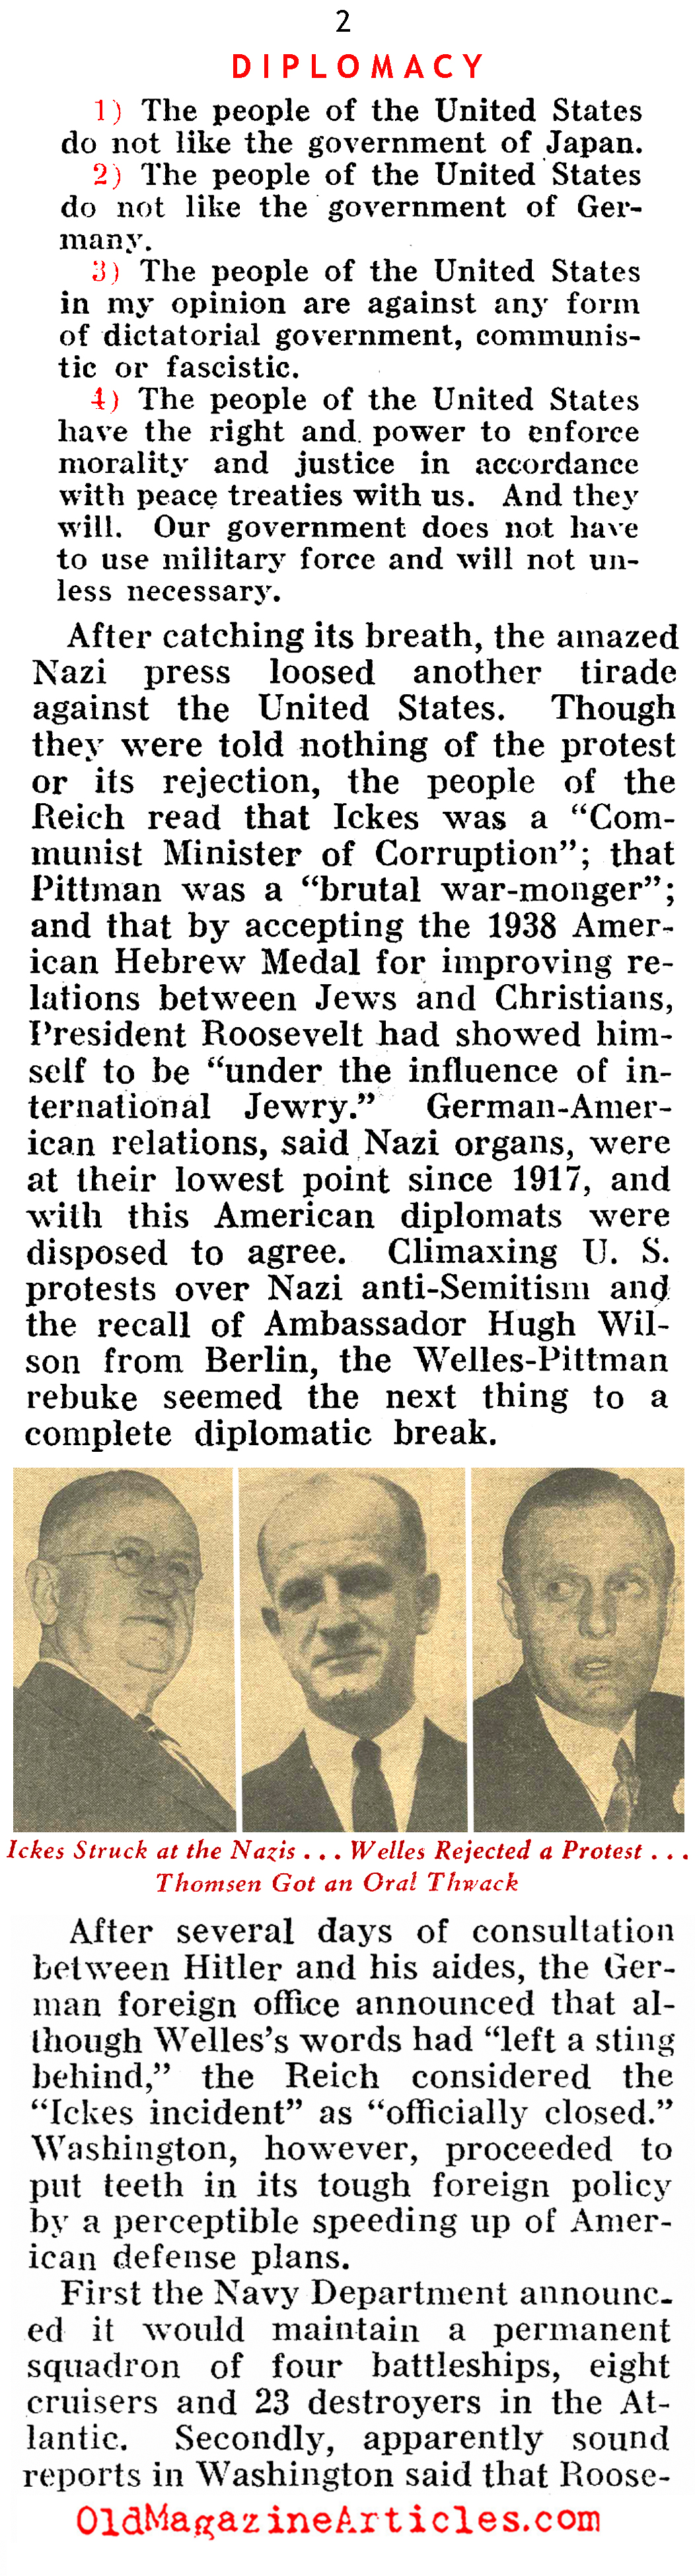 No, Joe Biden, U.S. Relations With Germany Were Bad Before the U.S. Entry Into W.W. II (Pathfinder Magazine, 1939)